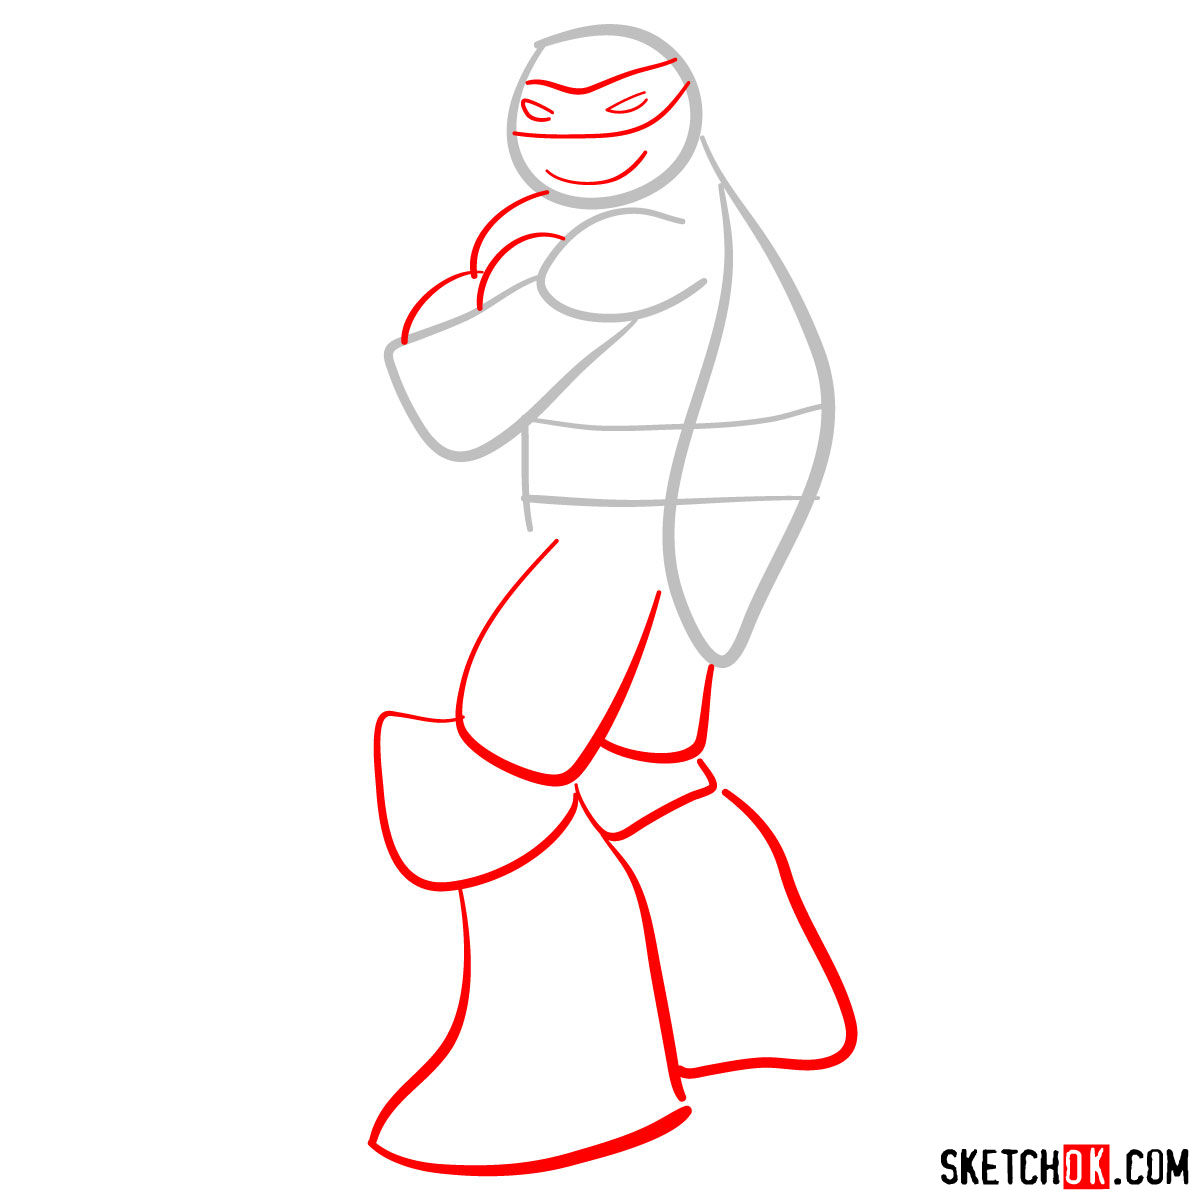 How to draw Raphael ninja turtle cartoon style - step 02